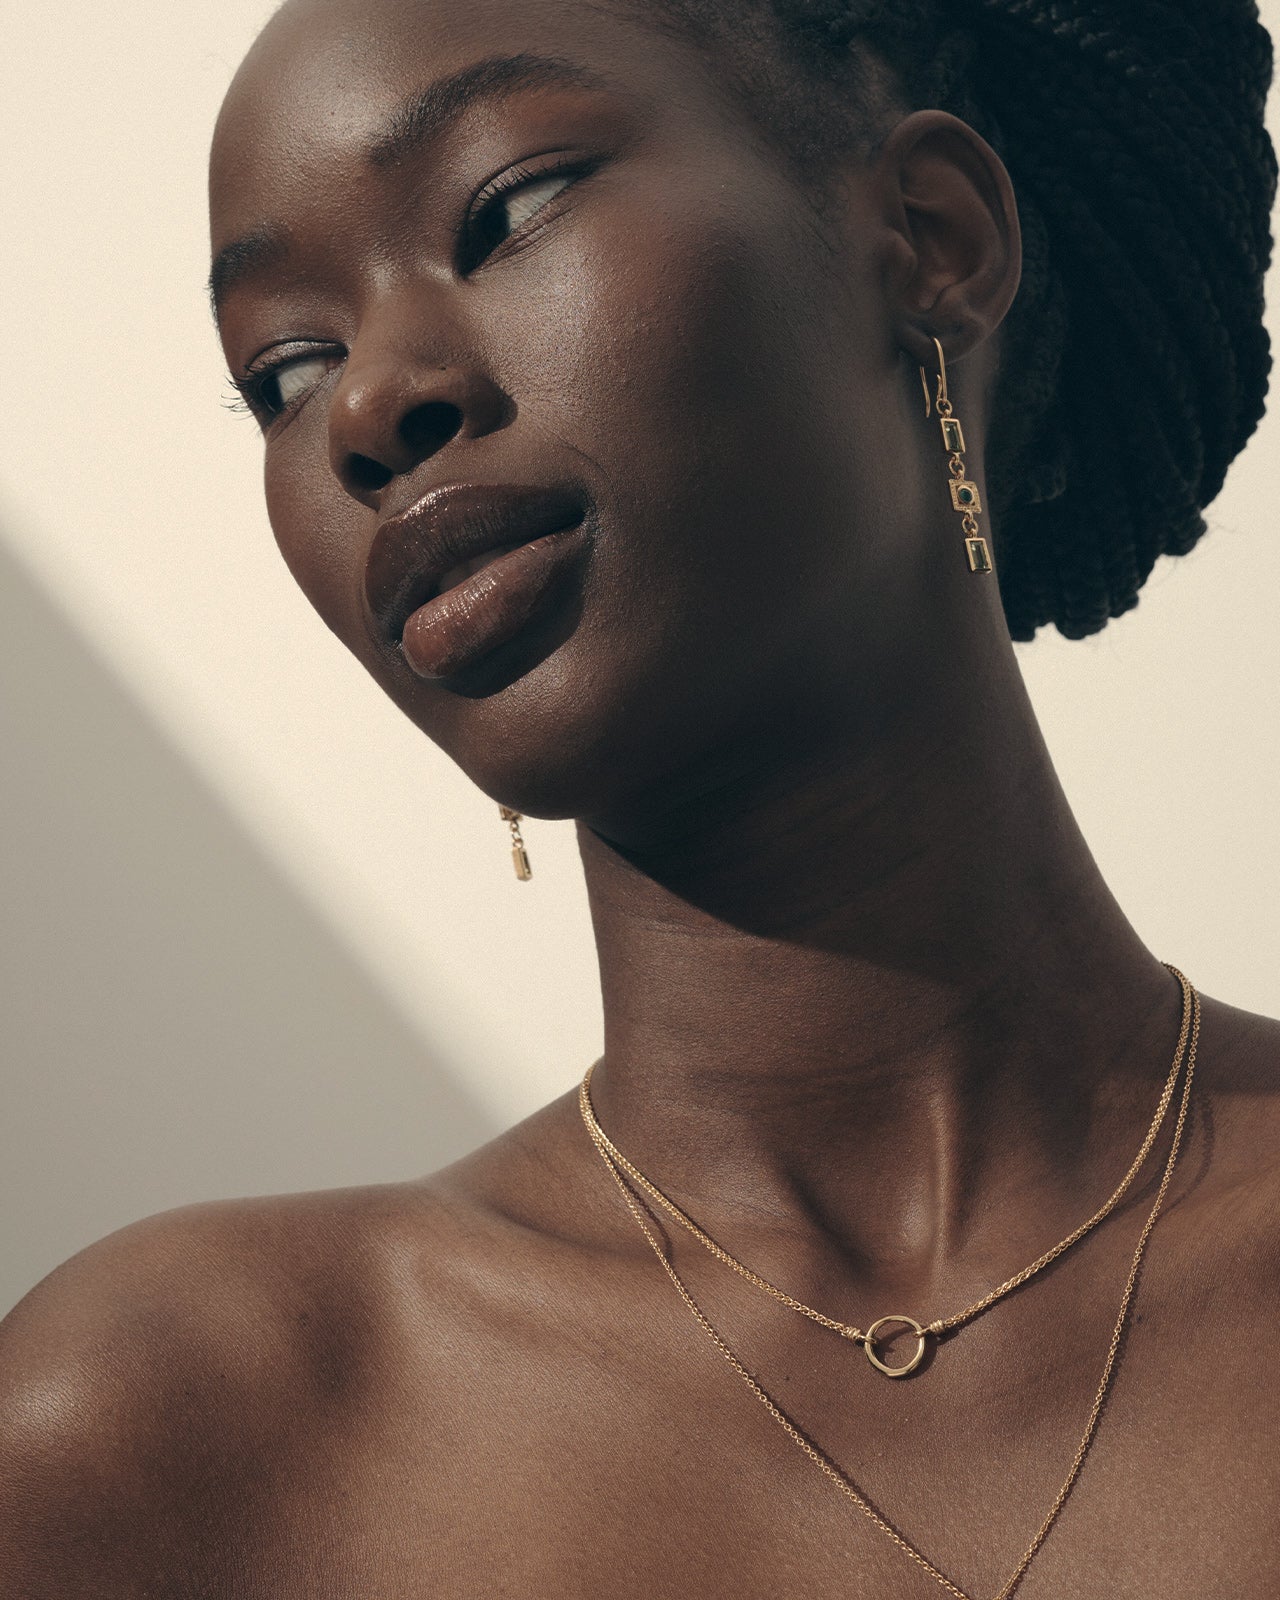 Celeste Dainty Minimalist Star Pendant Simple Choker Necklace in Gold or  Silver